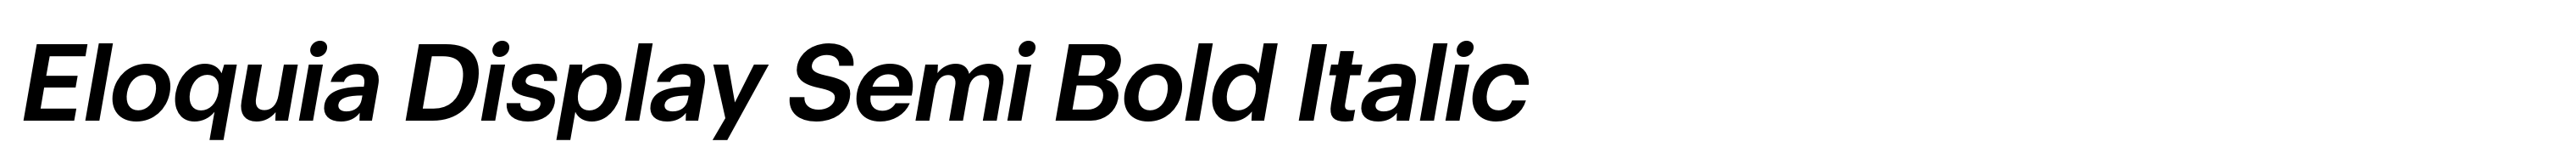 Eloquia Display Semi Bold Italic